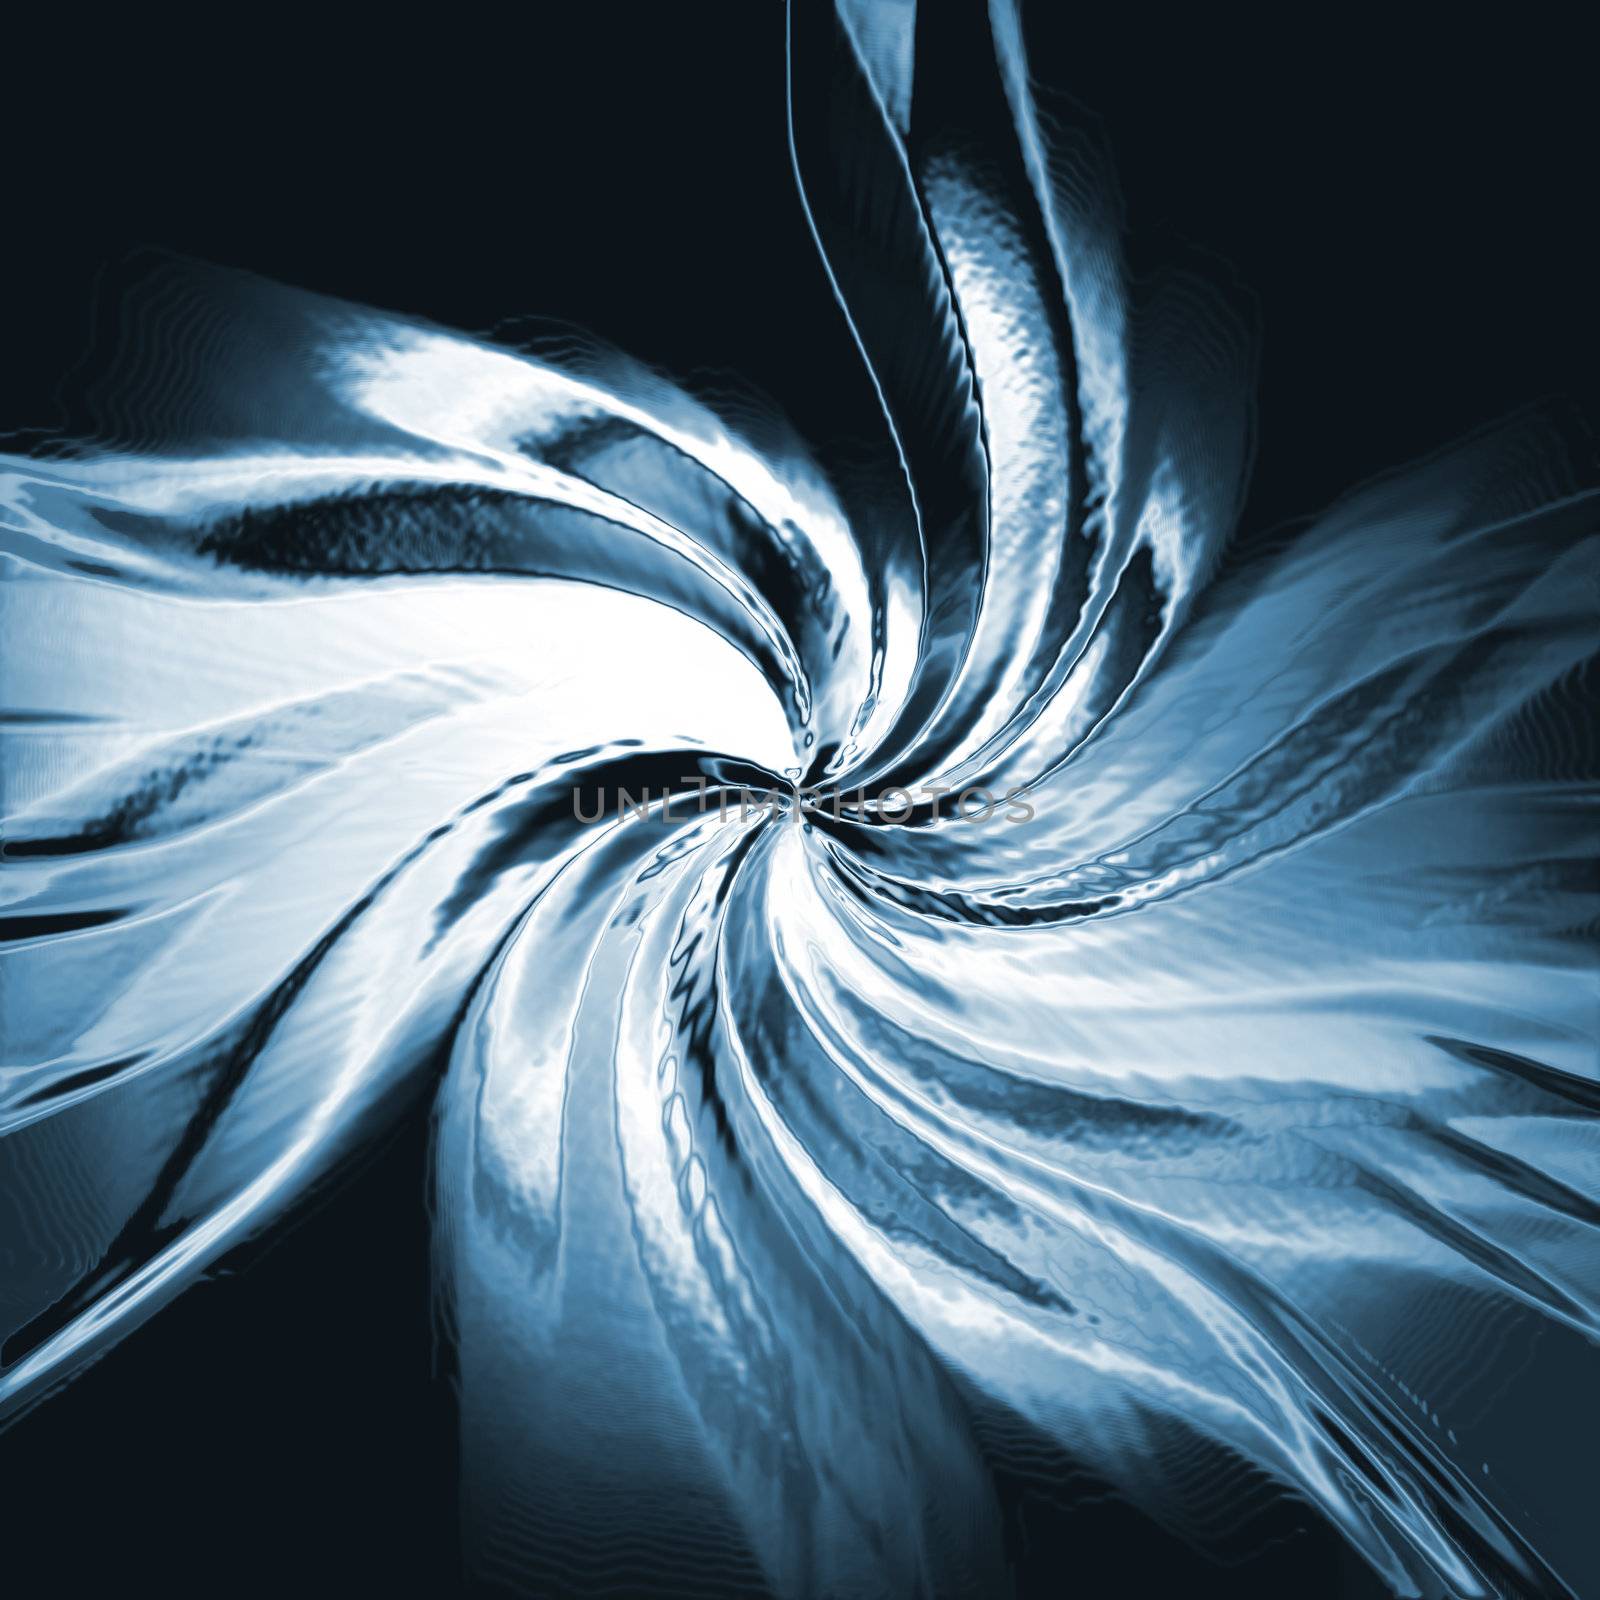 abstract water twirl by jonnysek